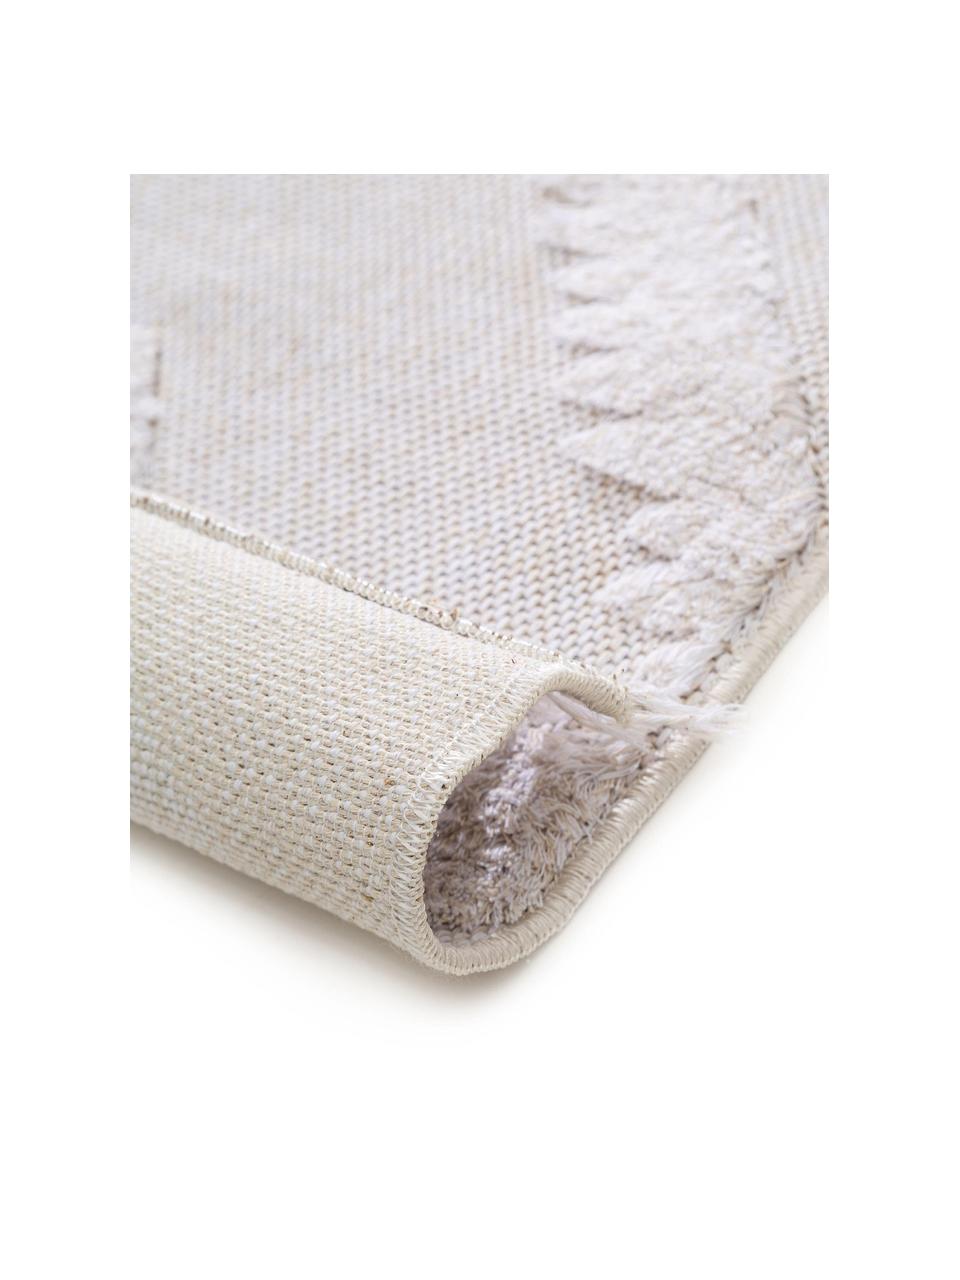 Alfombra lavable algodón texturizada Oslo, 100% algodón, Blanco crema, beige, An 190 x L 280 cm (Tamaño M)